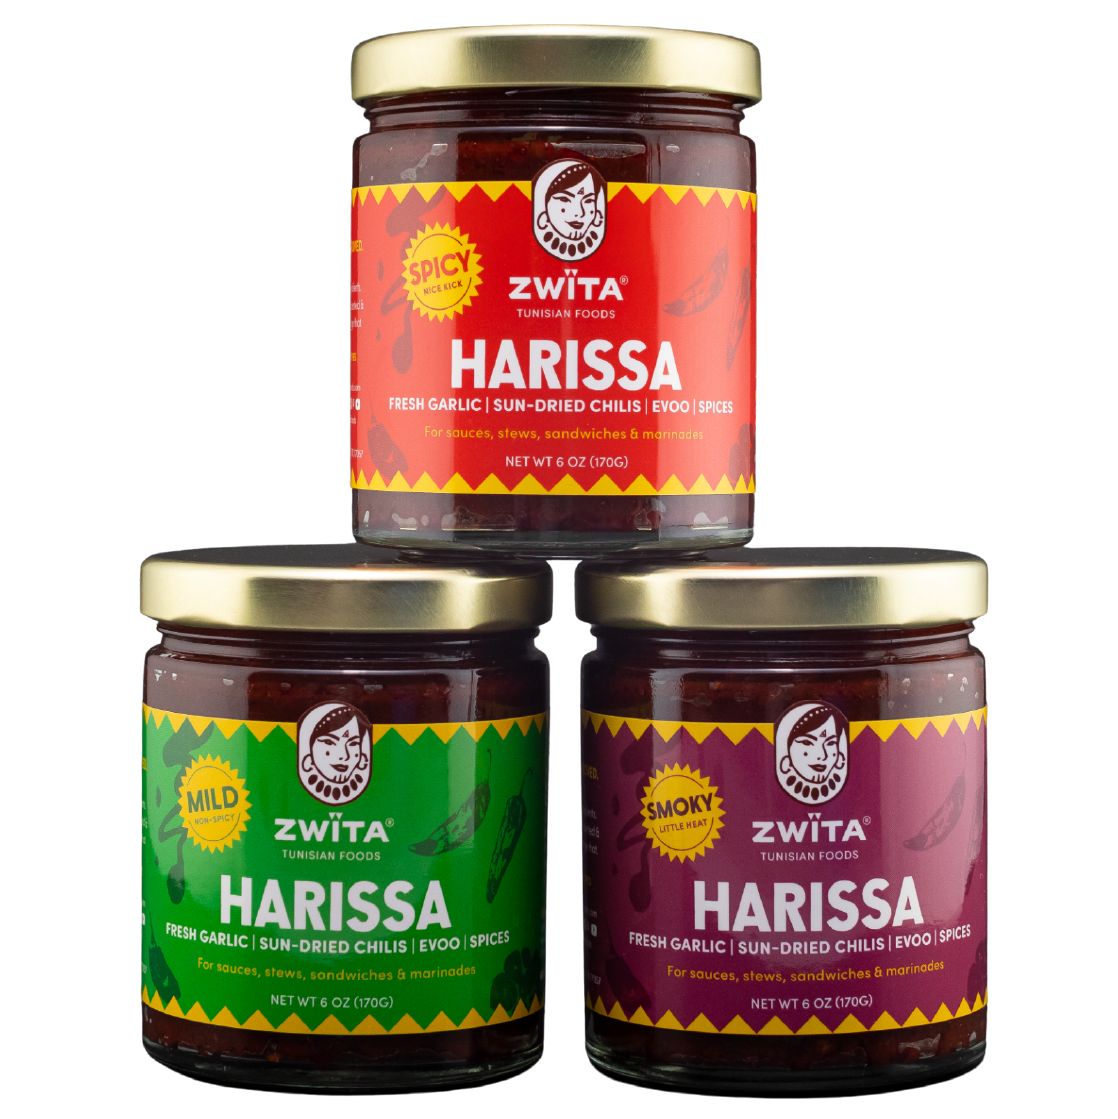 Traditional Harissa Variety Pack